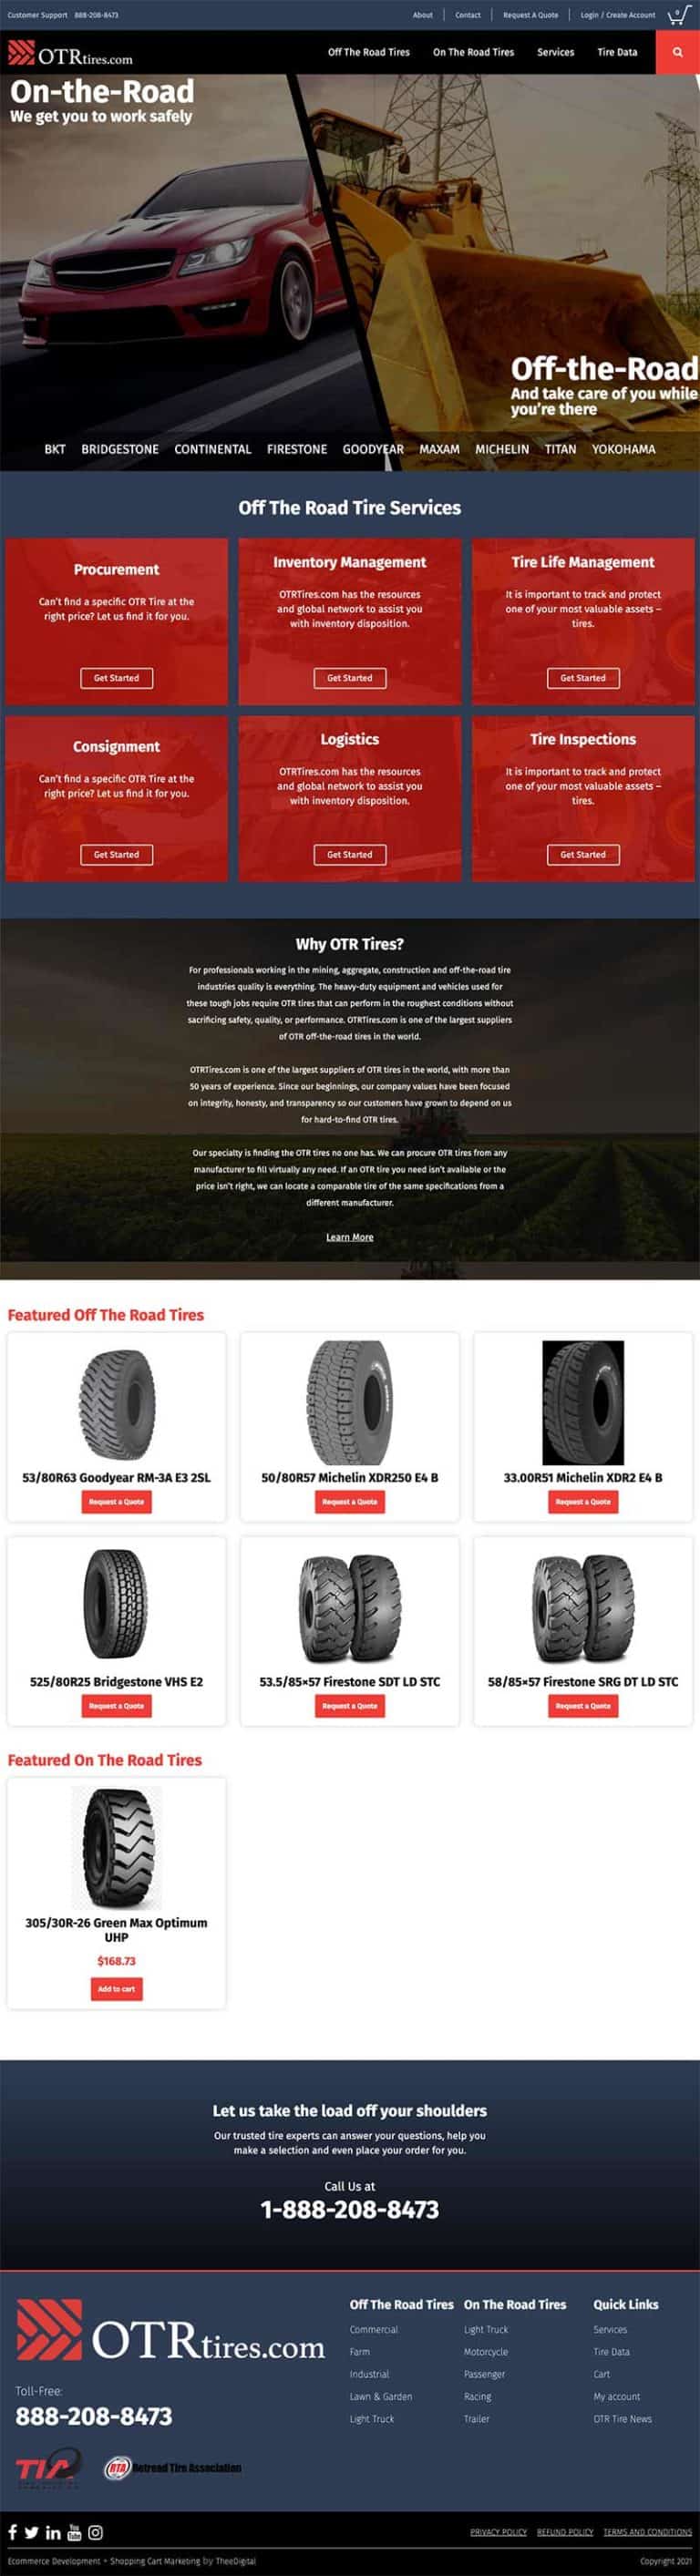 Custom Web Design for Online Auto Parts Company